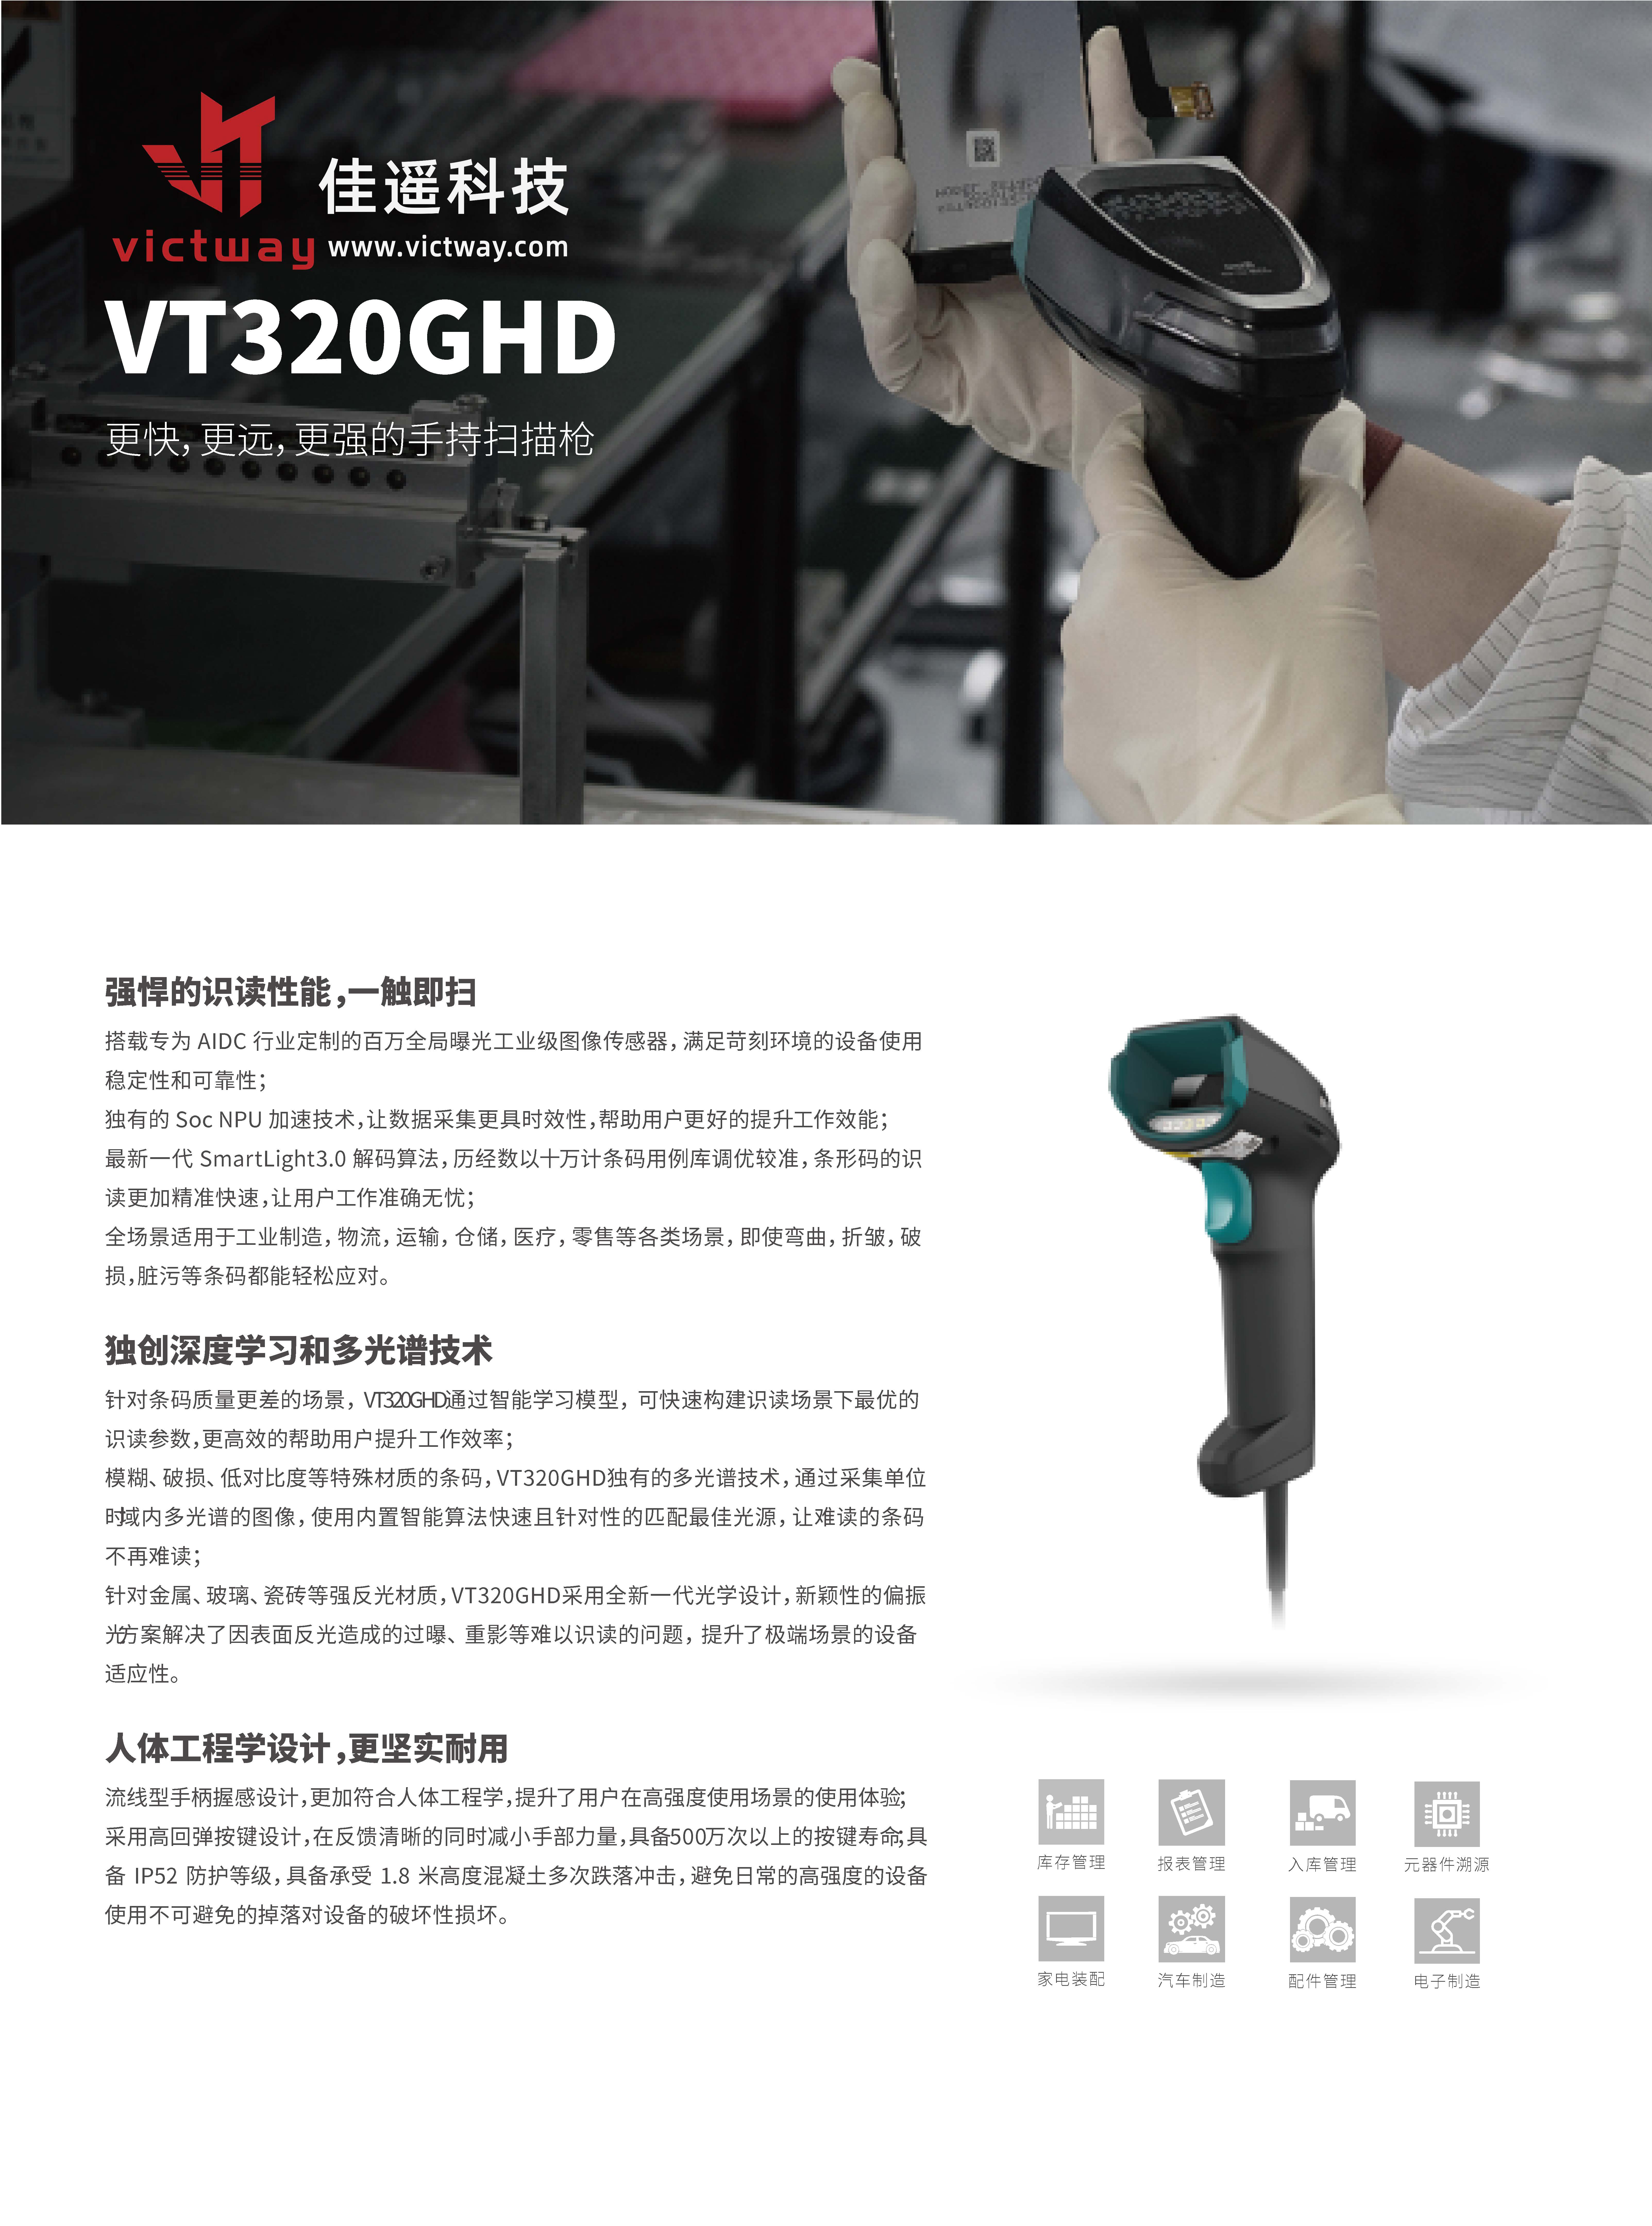 VT320GHD扫描枪佳遥victway二维码条码扫描器dpm金属手持式扫描枪